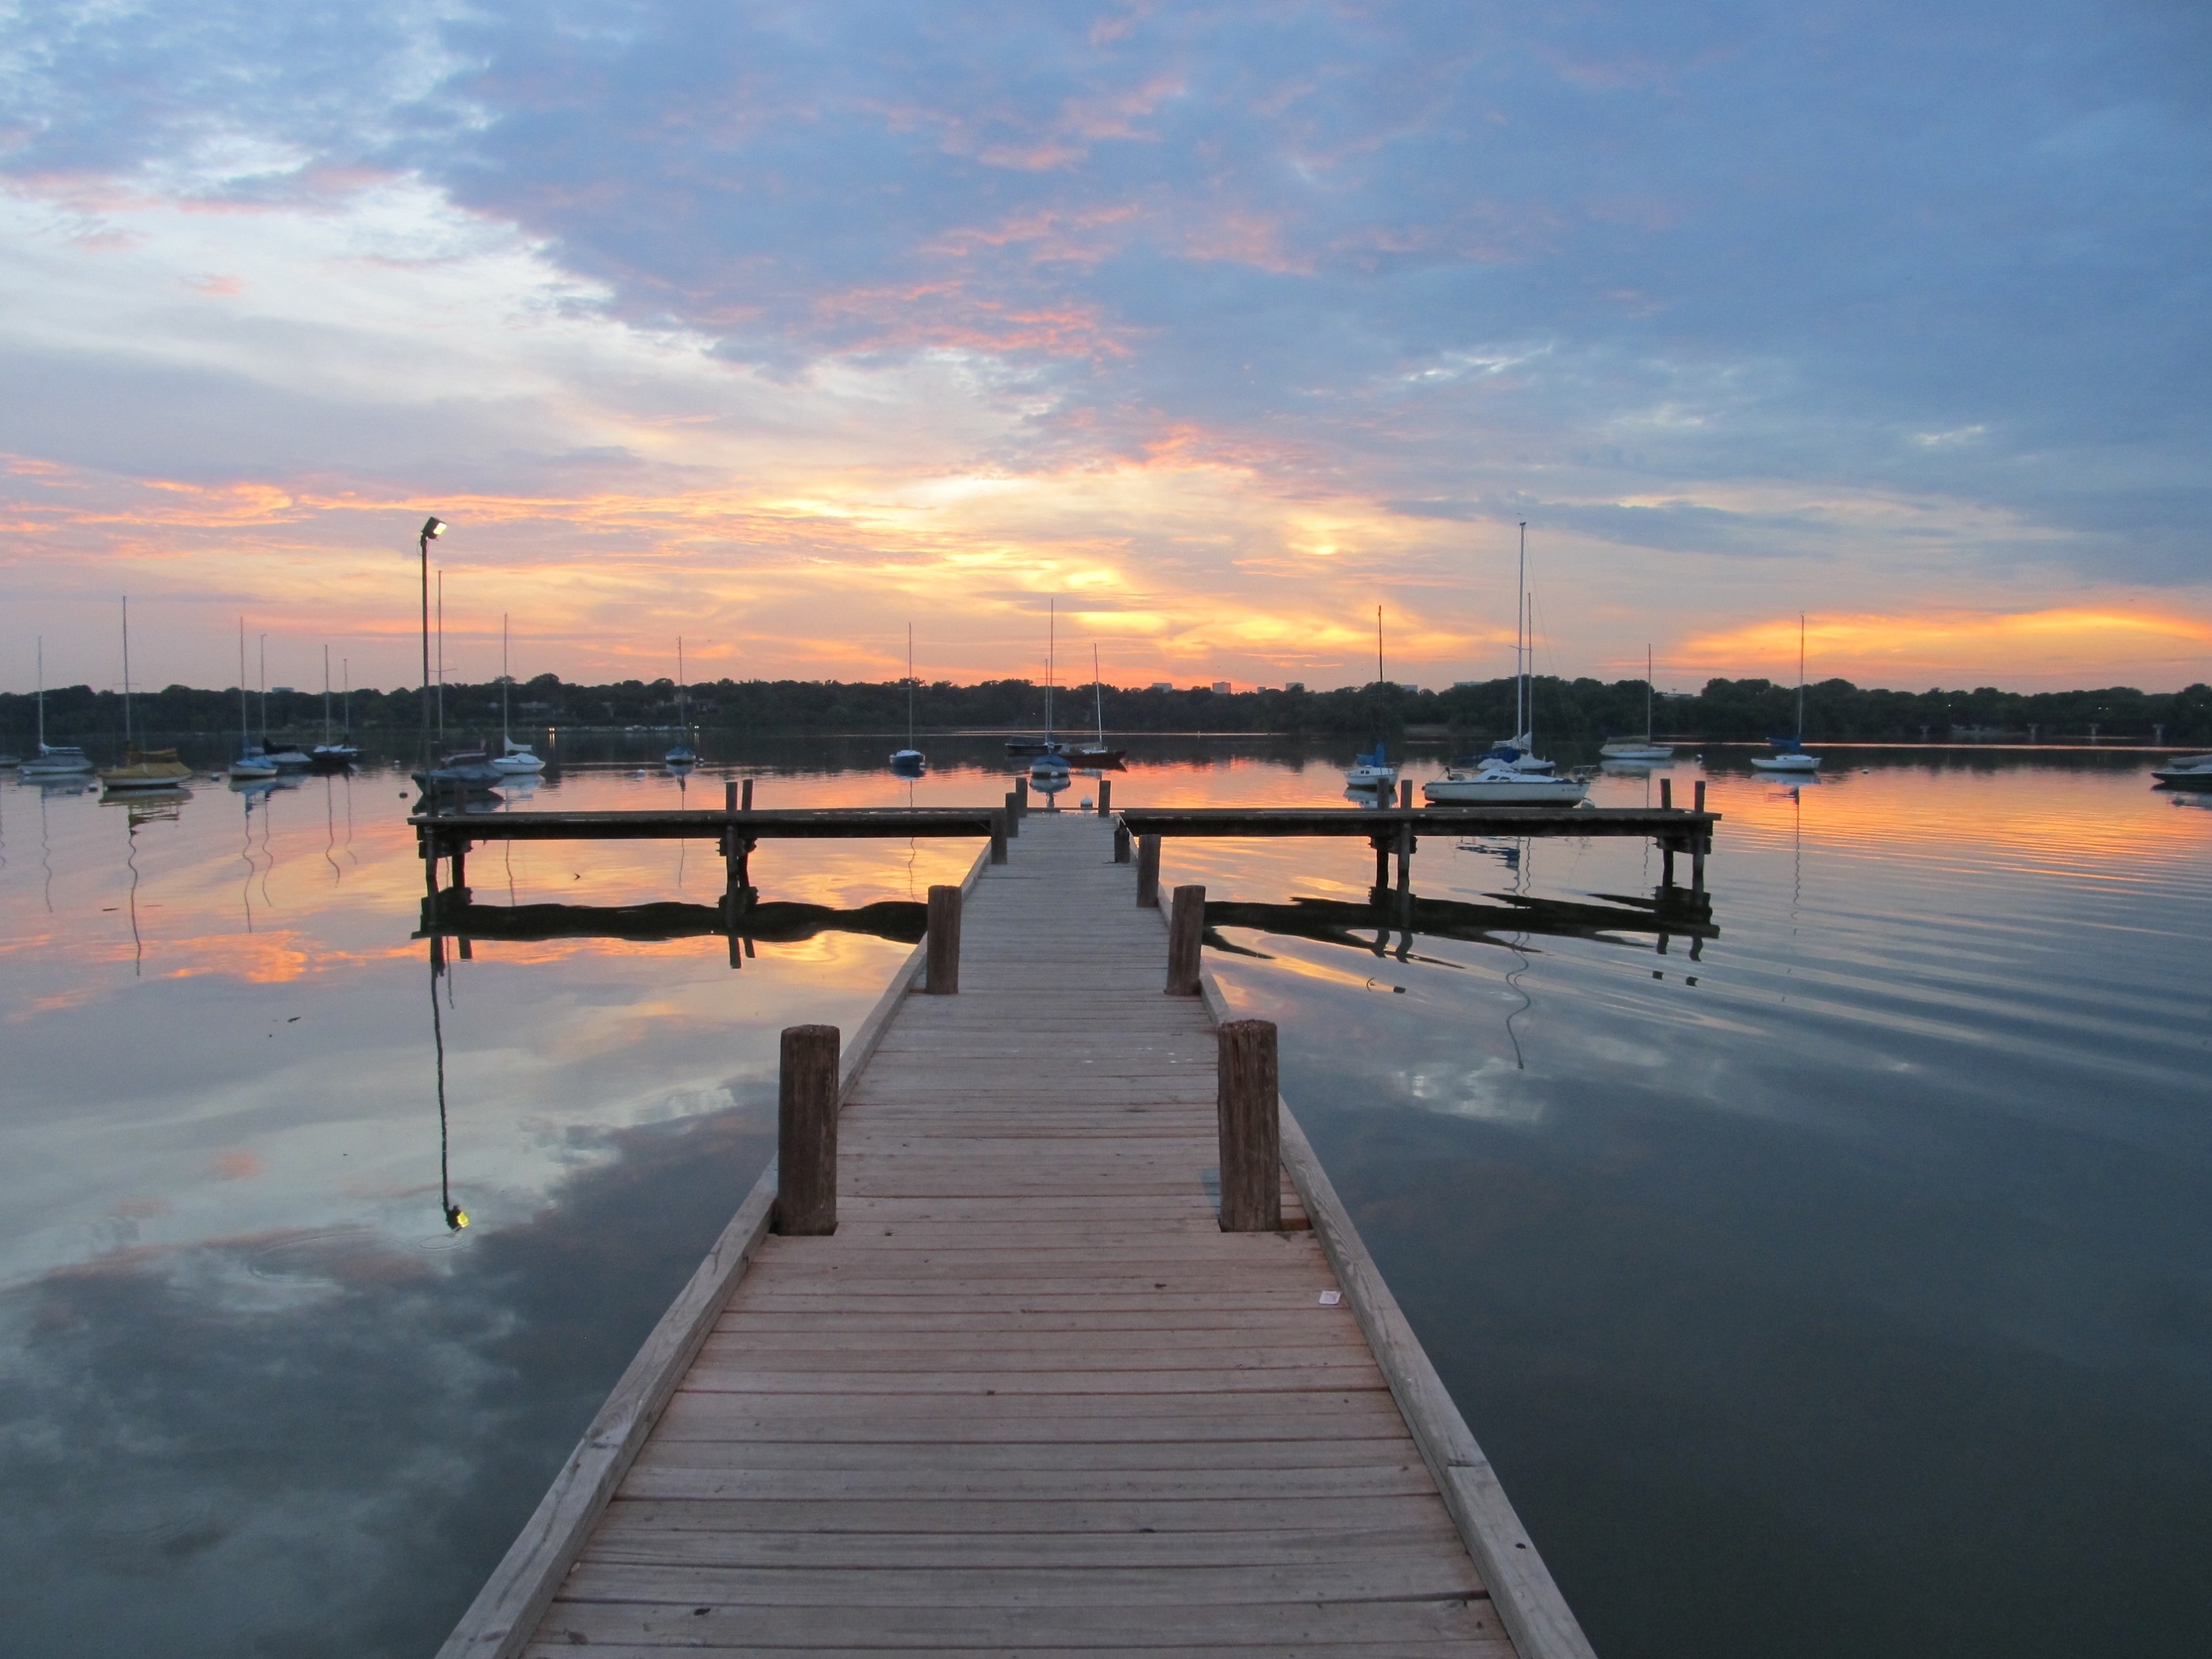 Lake, Dock, Sunset, Serene, Boats, Pier, sunset, reflection